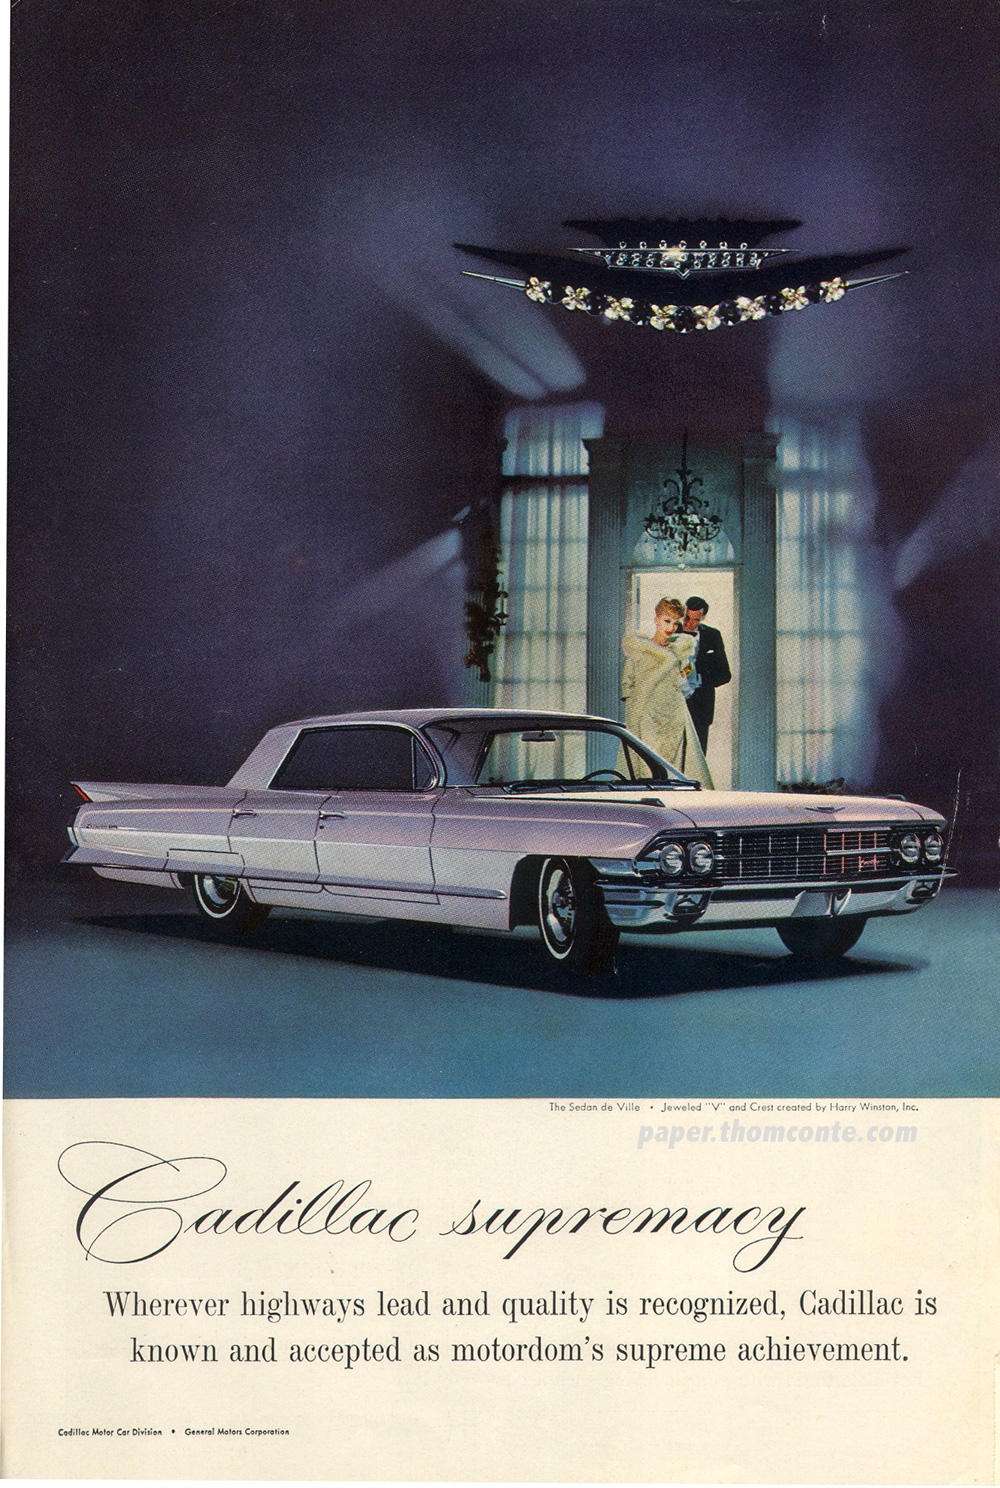 Cadillac Supremacy advertisement